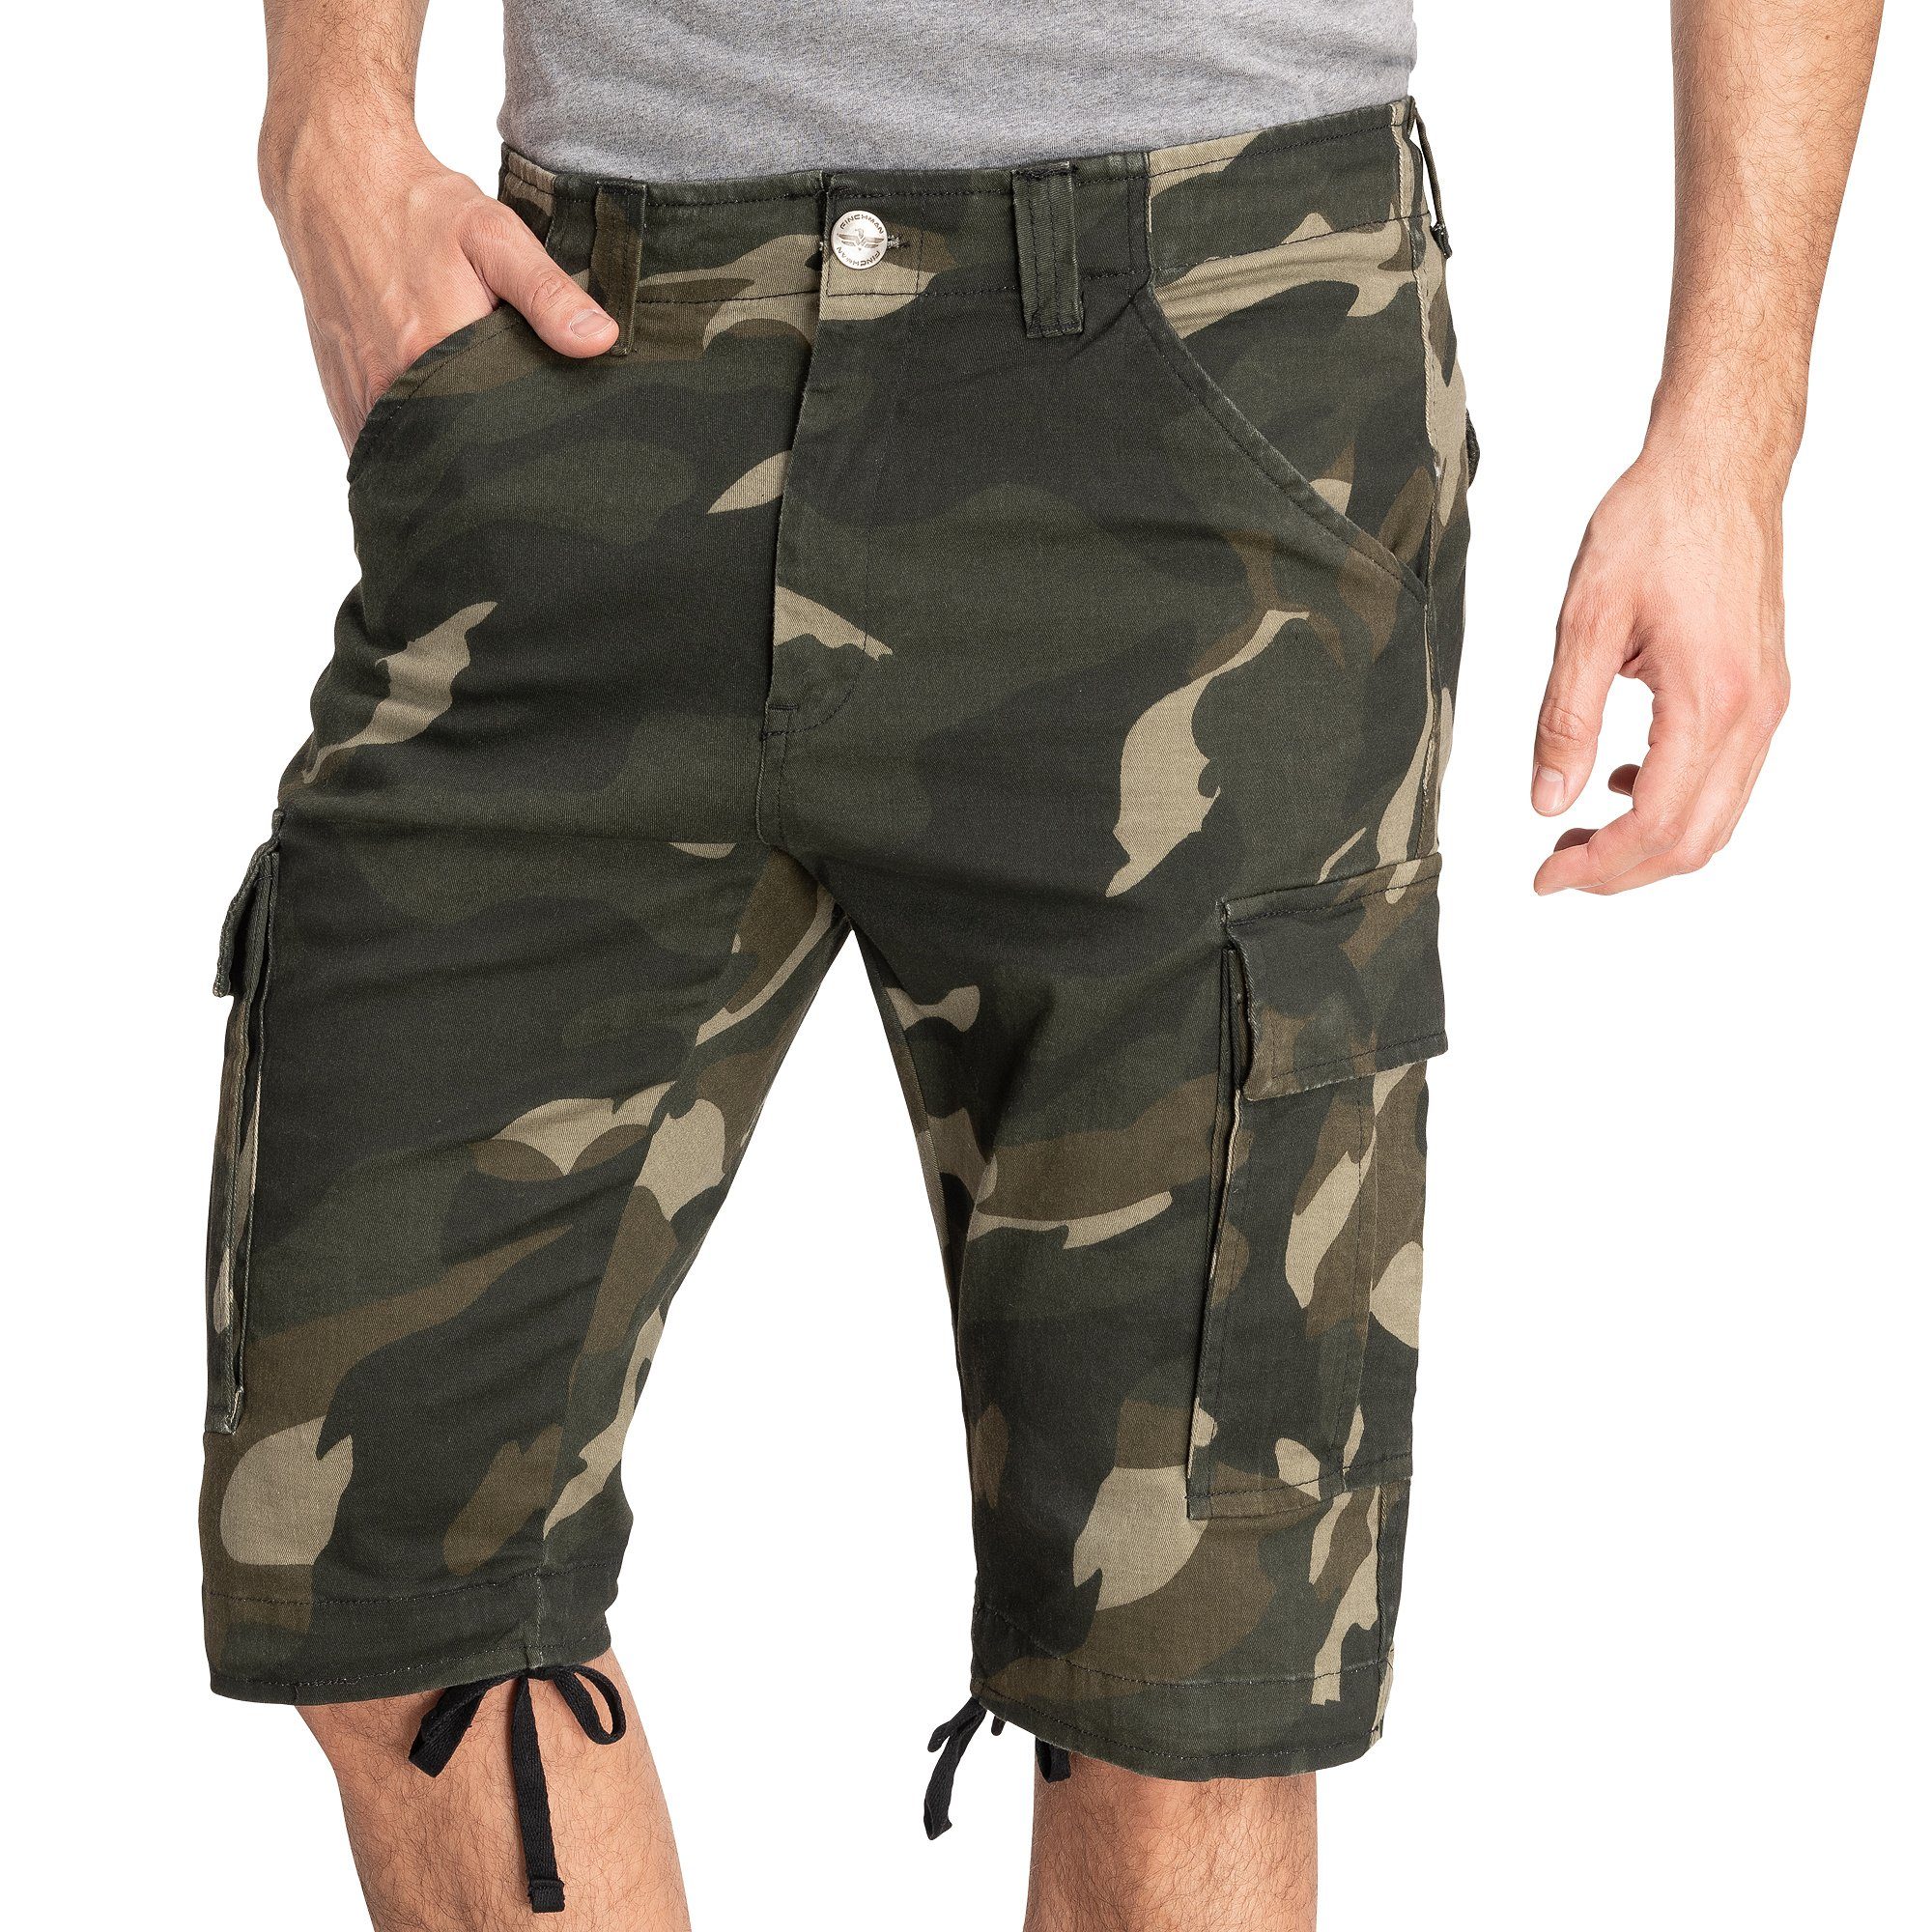 Herren Cargo Shorts Bermuda Vintage Camo Kurze Hosen Cargohose Sporthose Pants